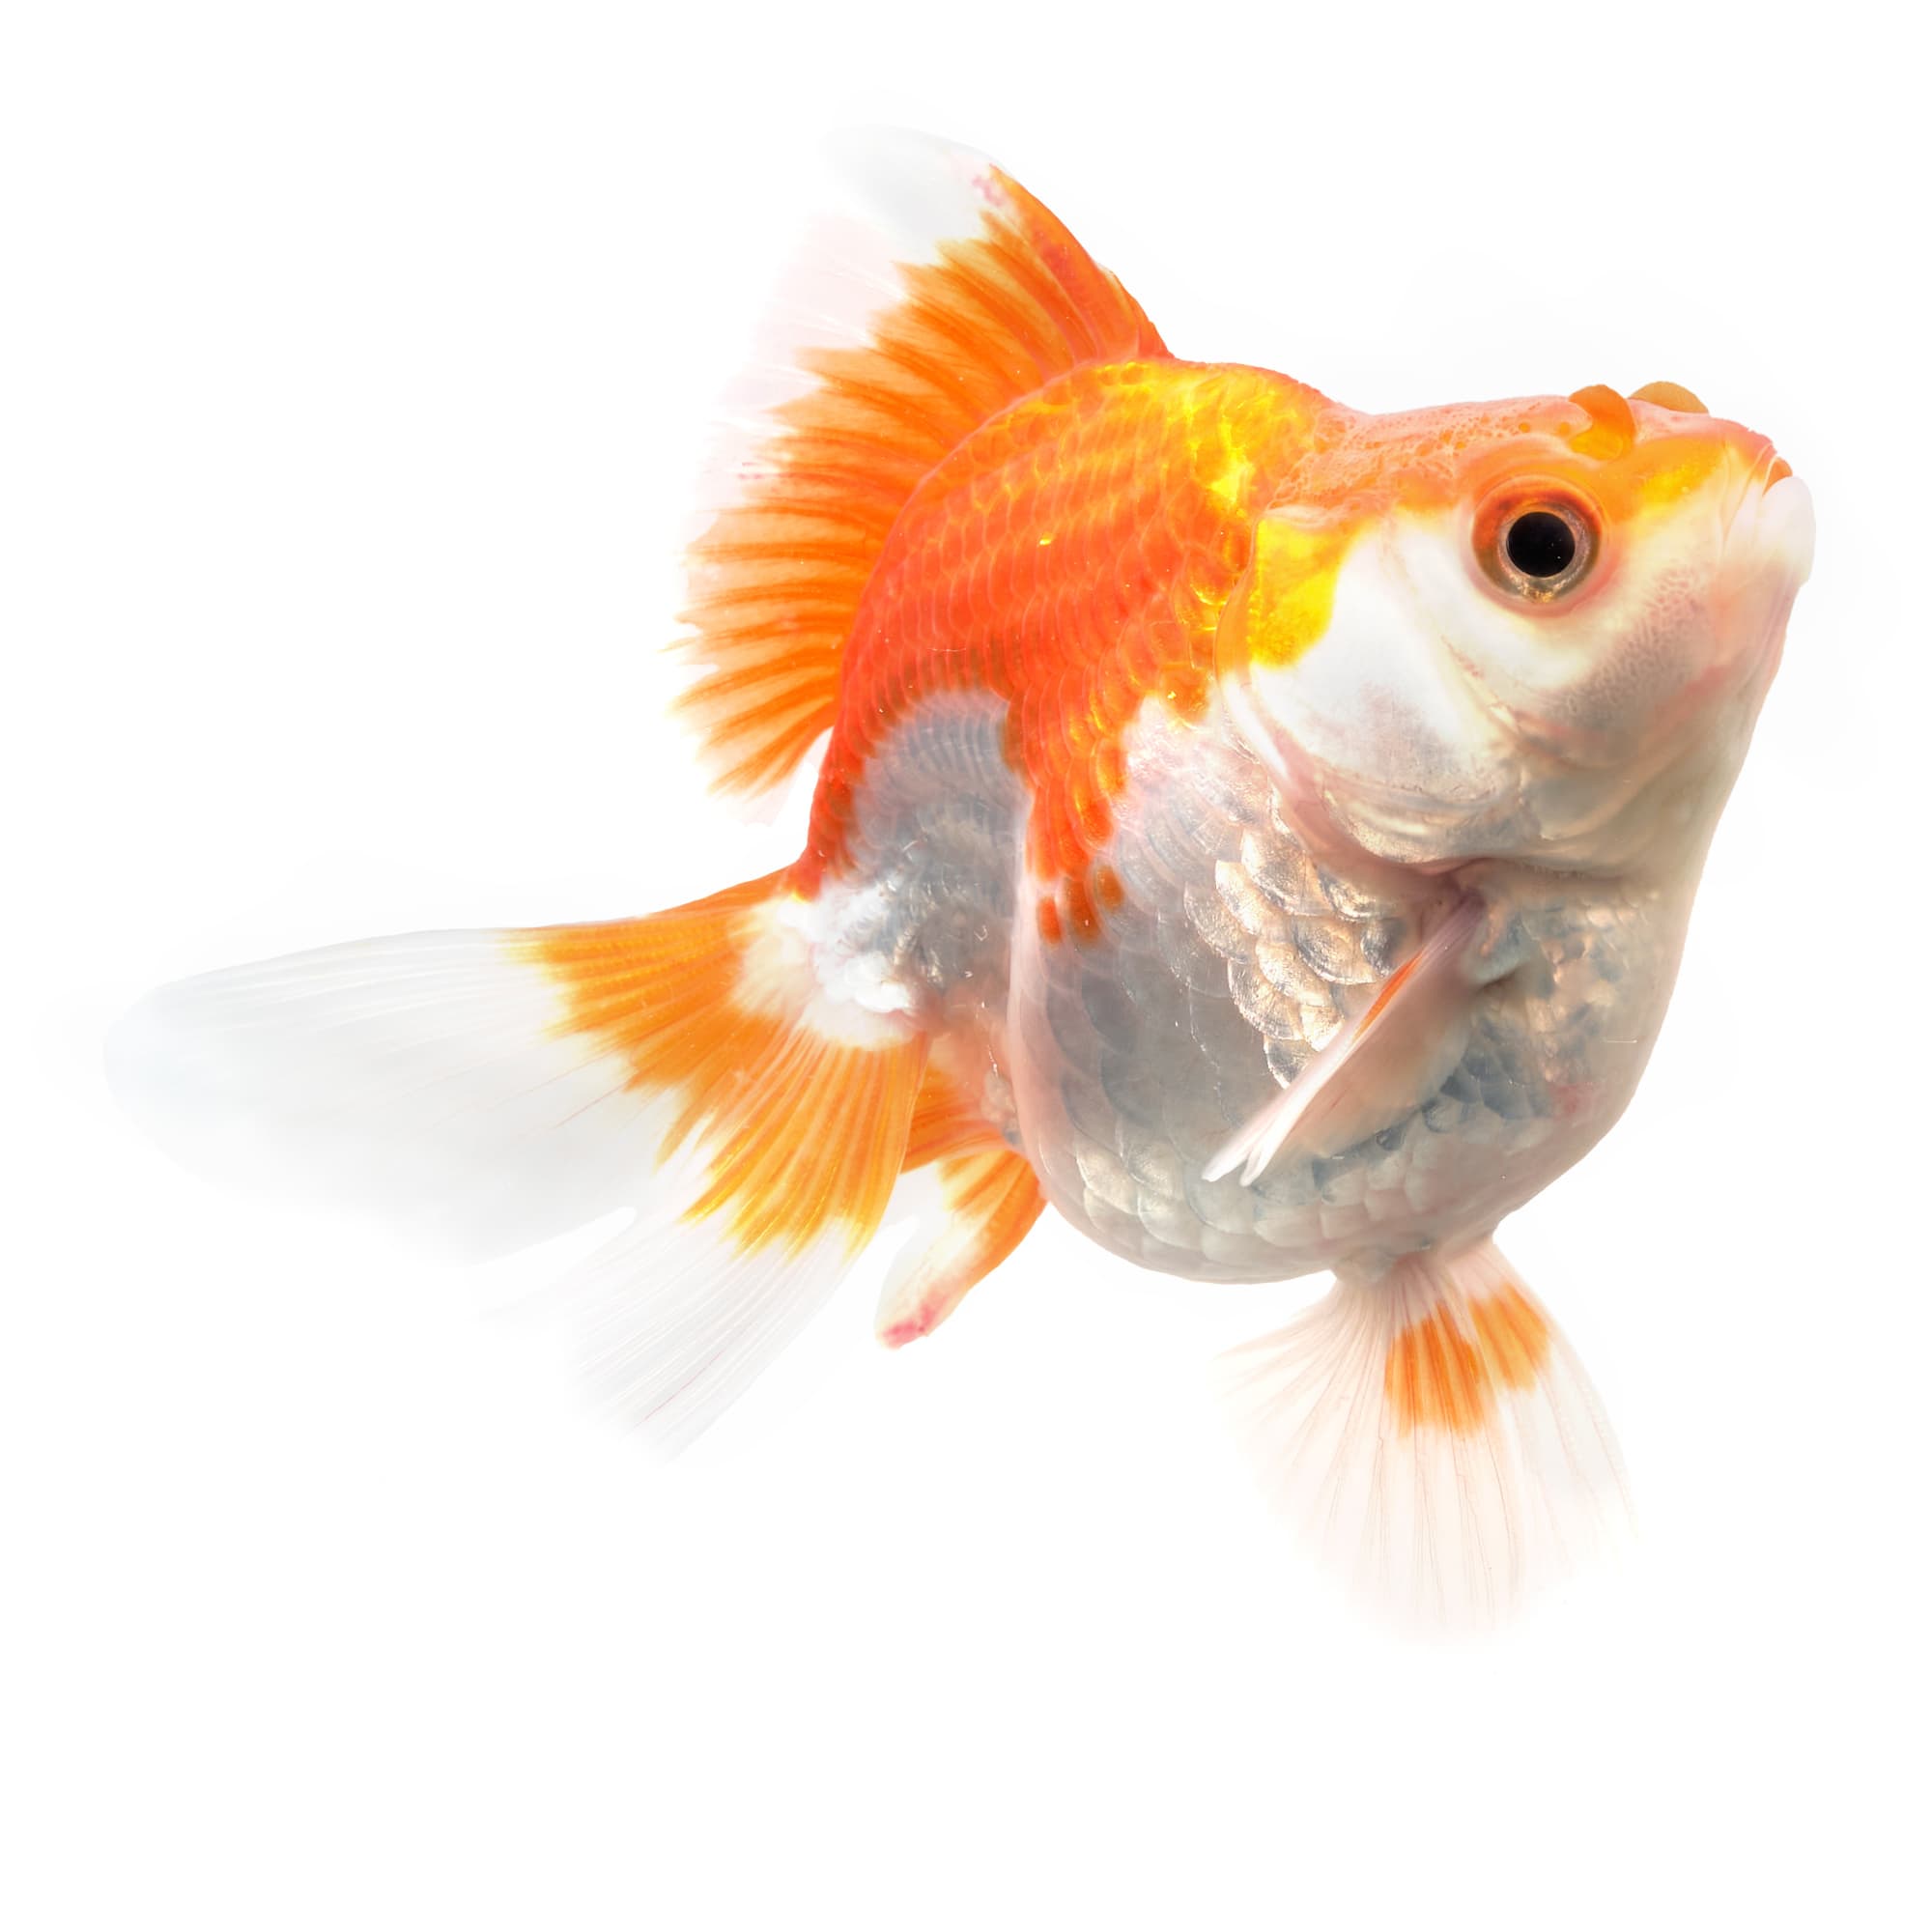 Jumbo Ryukin Goldfish For Sale 4-5